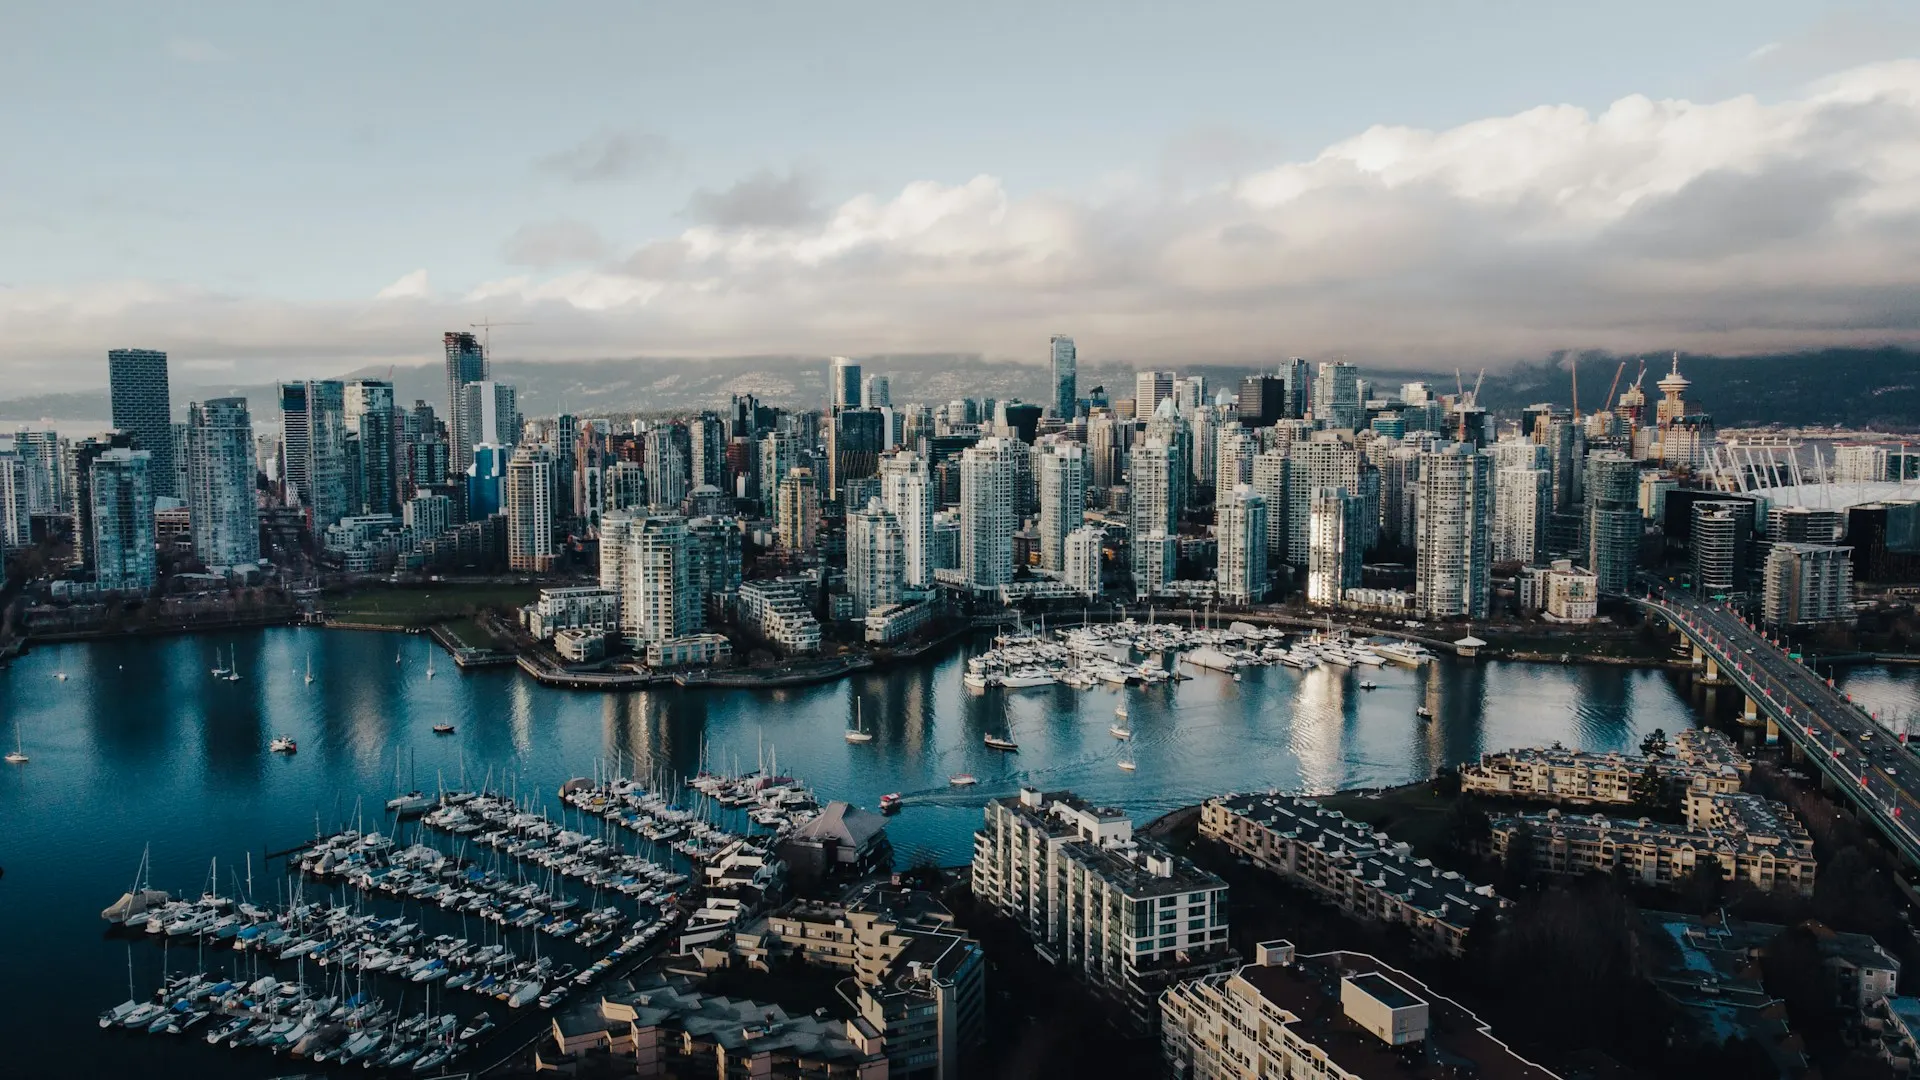 Cityscape of Vancouver. Source: Photo by Matt Wang on Unsplash